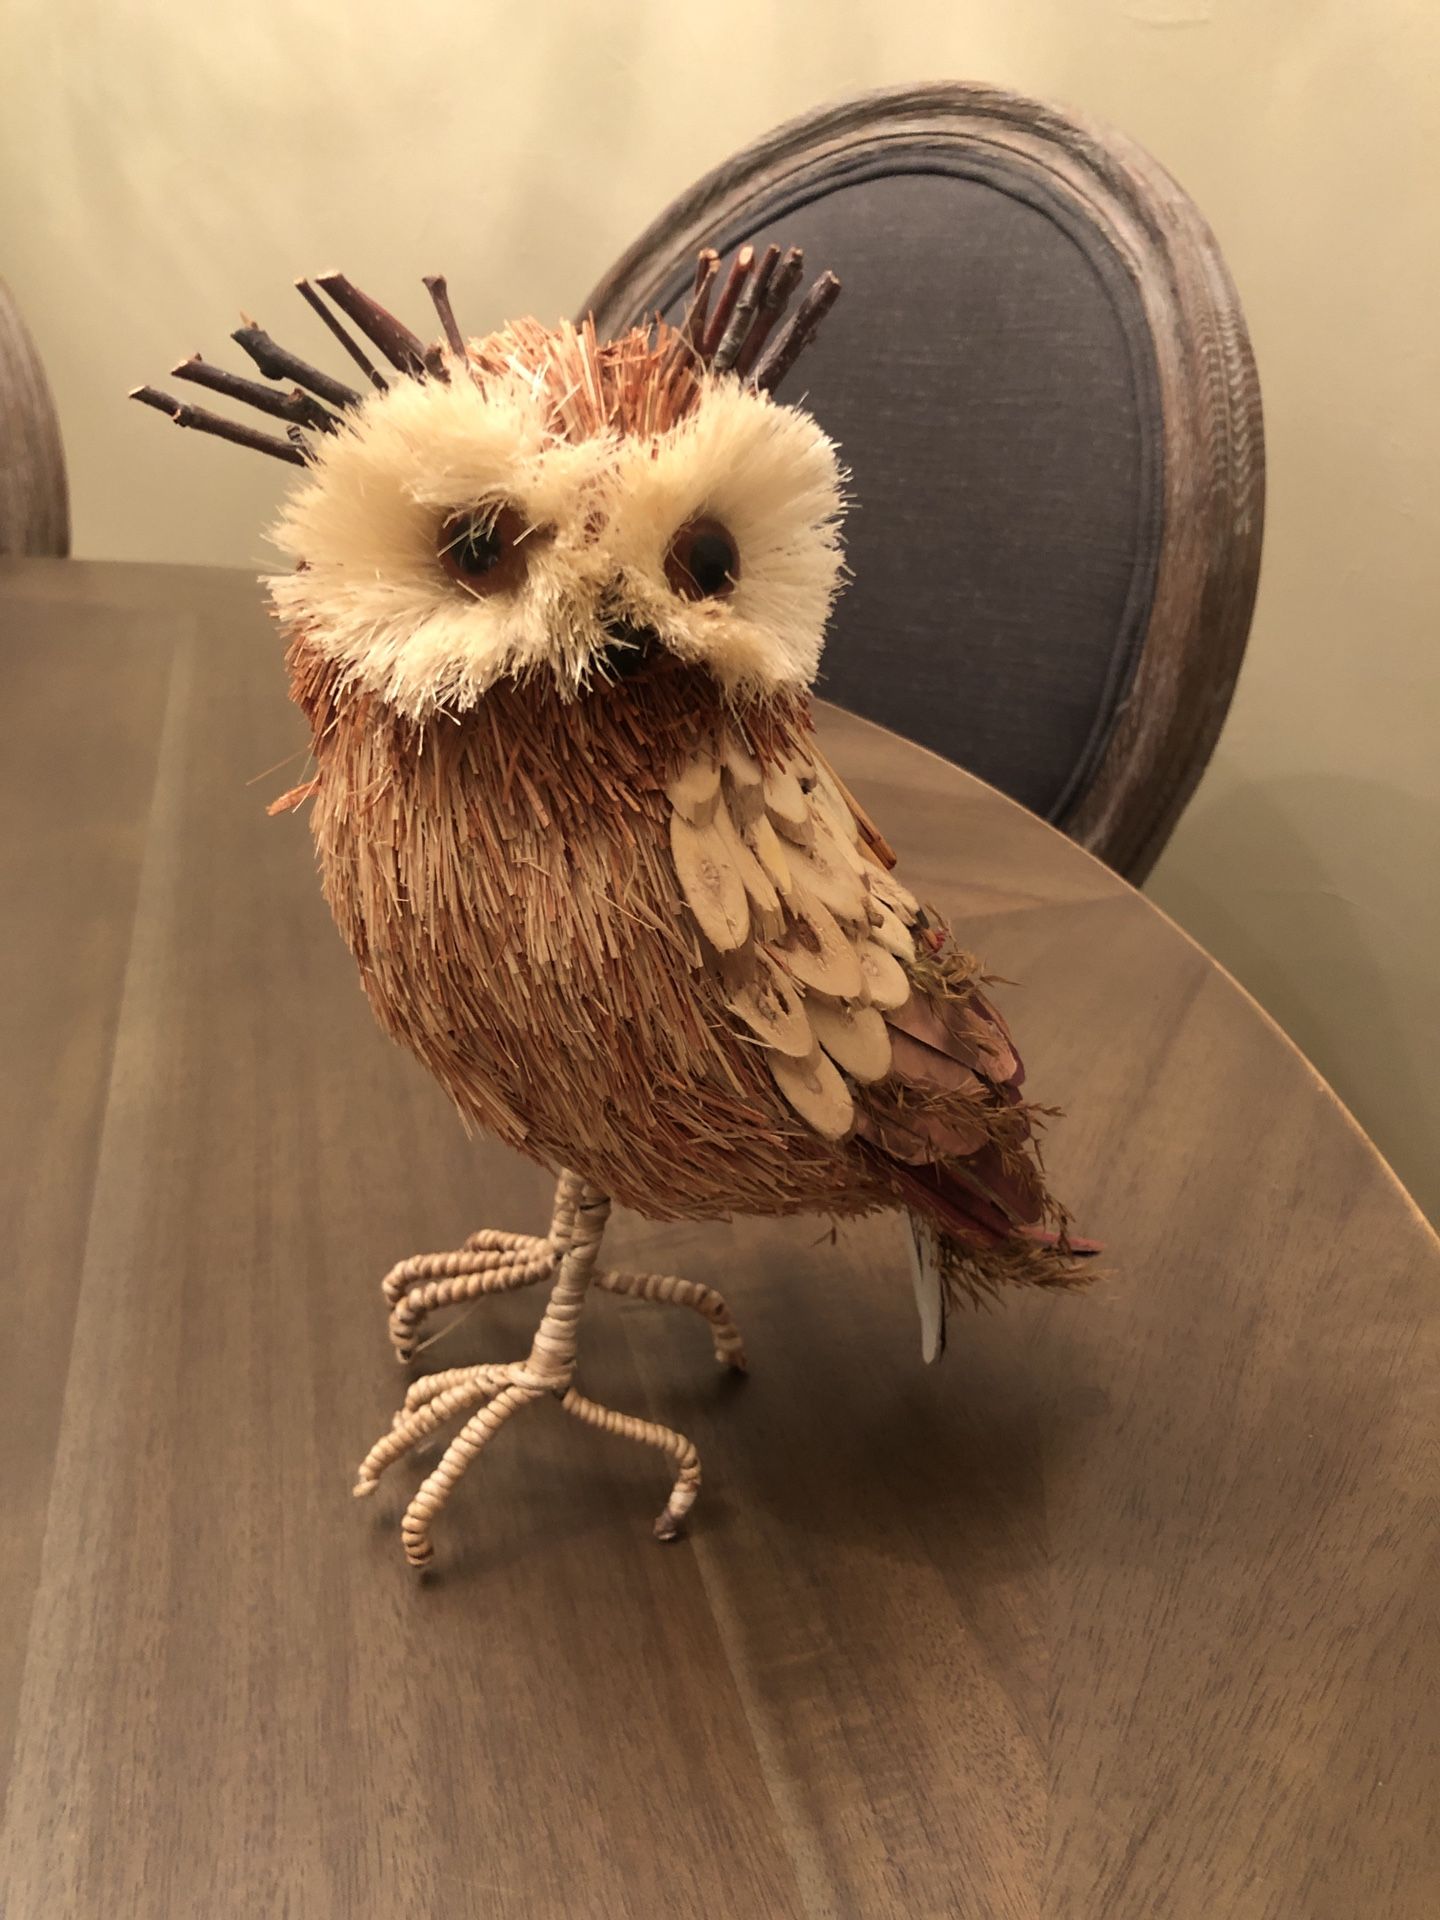 Owl decor